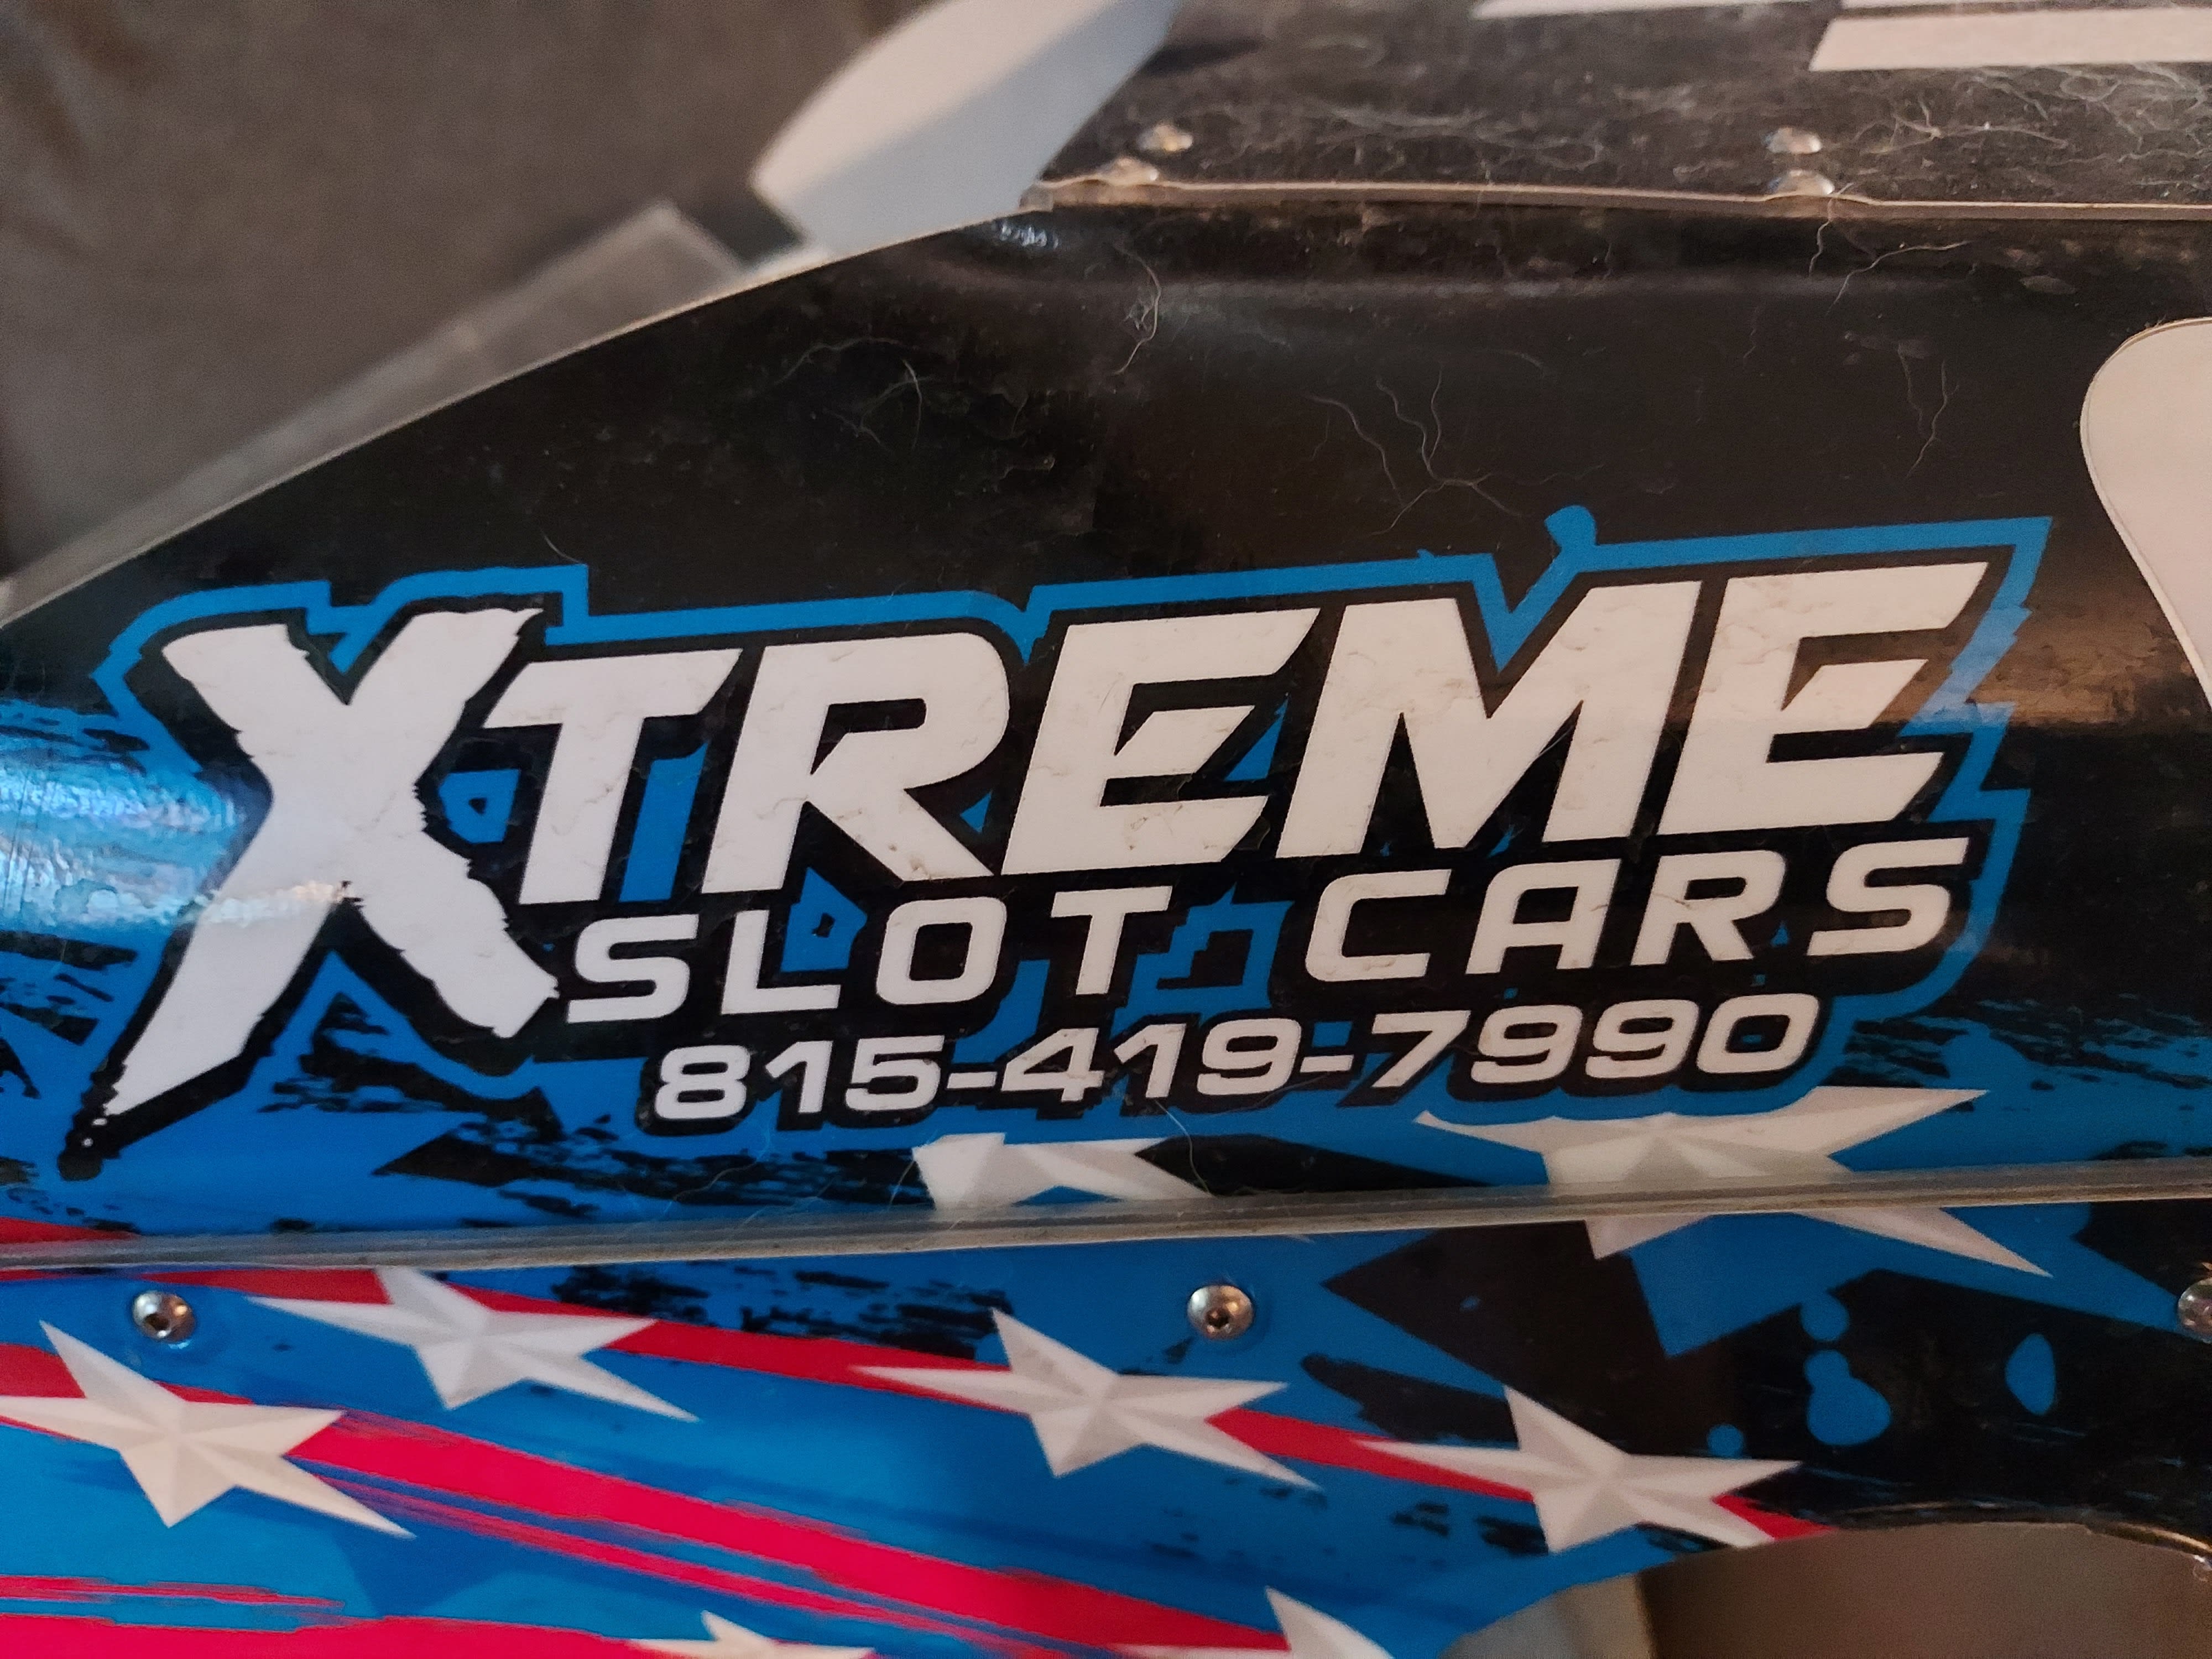 Xtreme Slot Cars